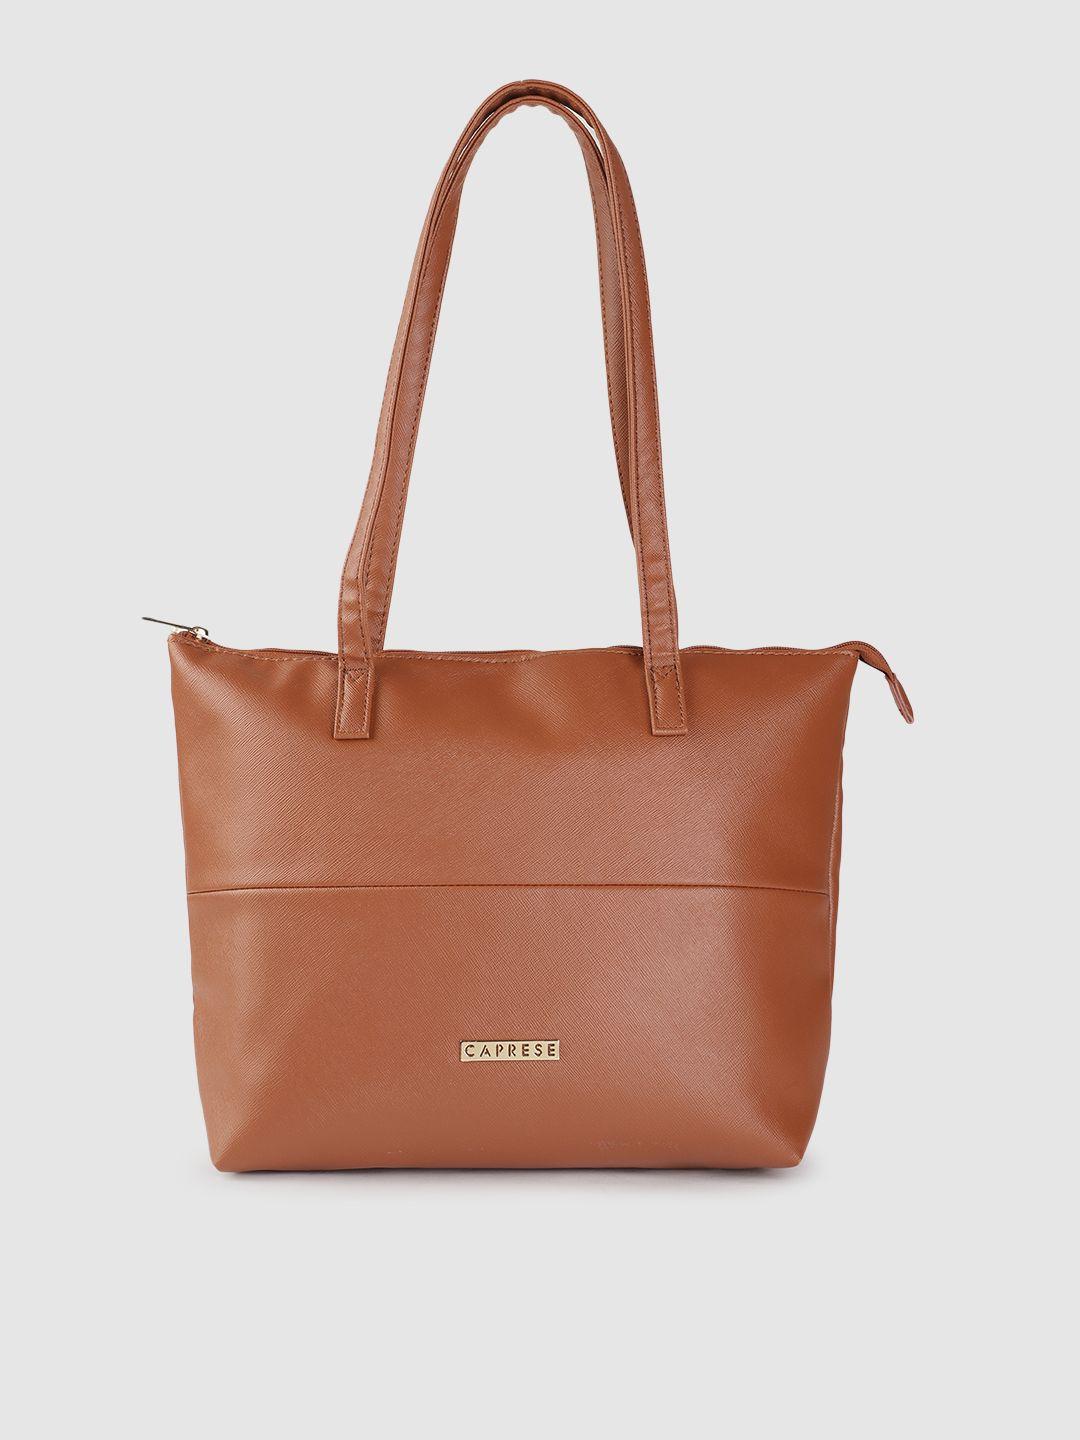 caprese brown saffiano textured structured shoulder bag